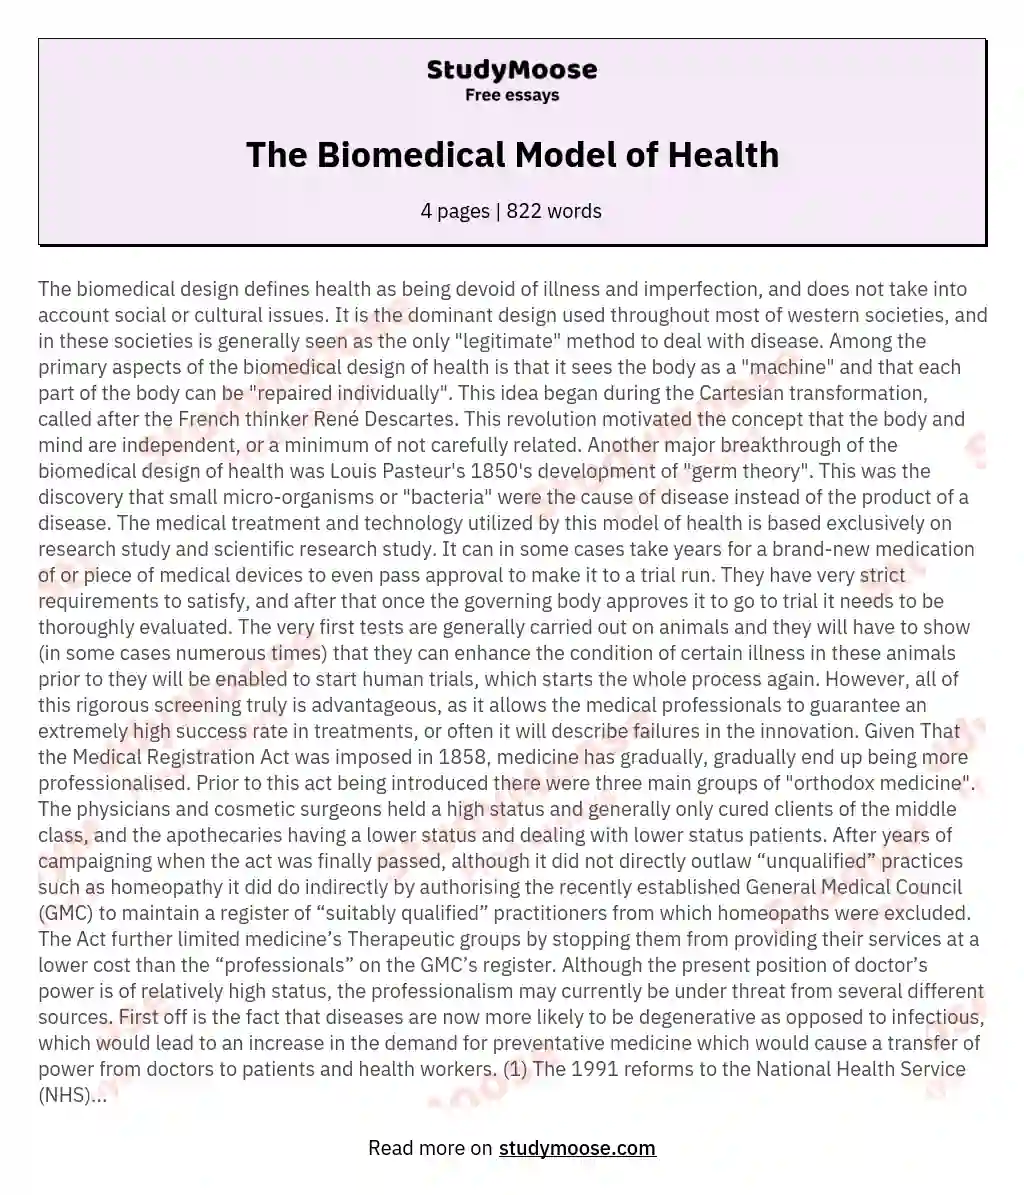 The Biomedical Model of Health essay